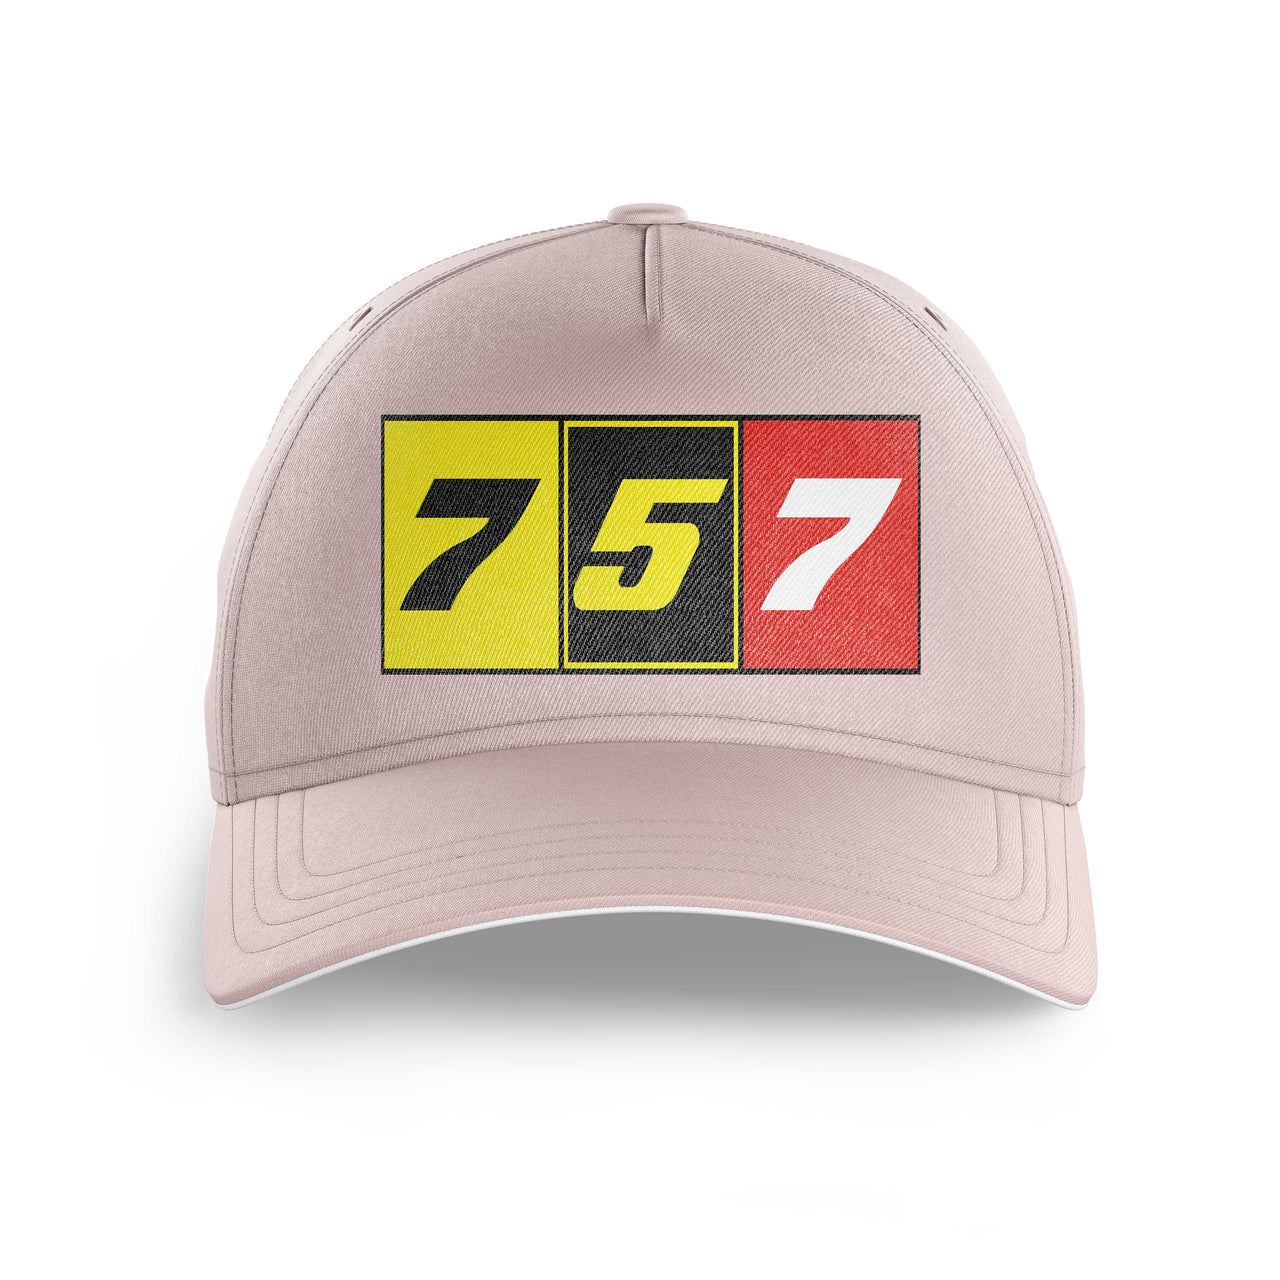 Flat Colourful 757 Printed Hats